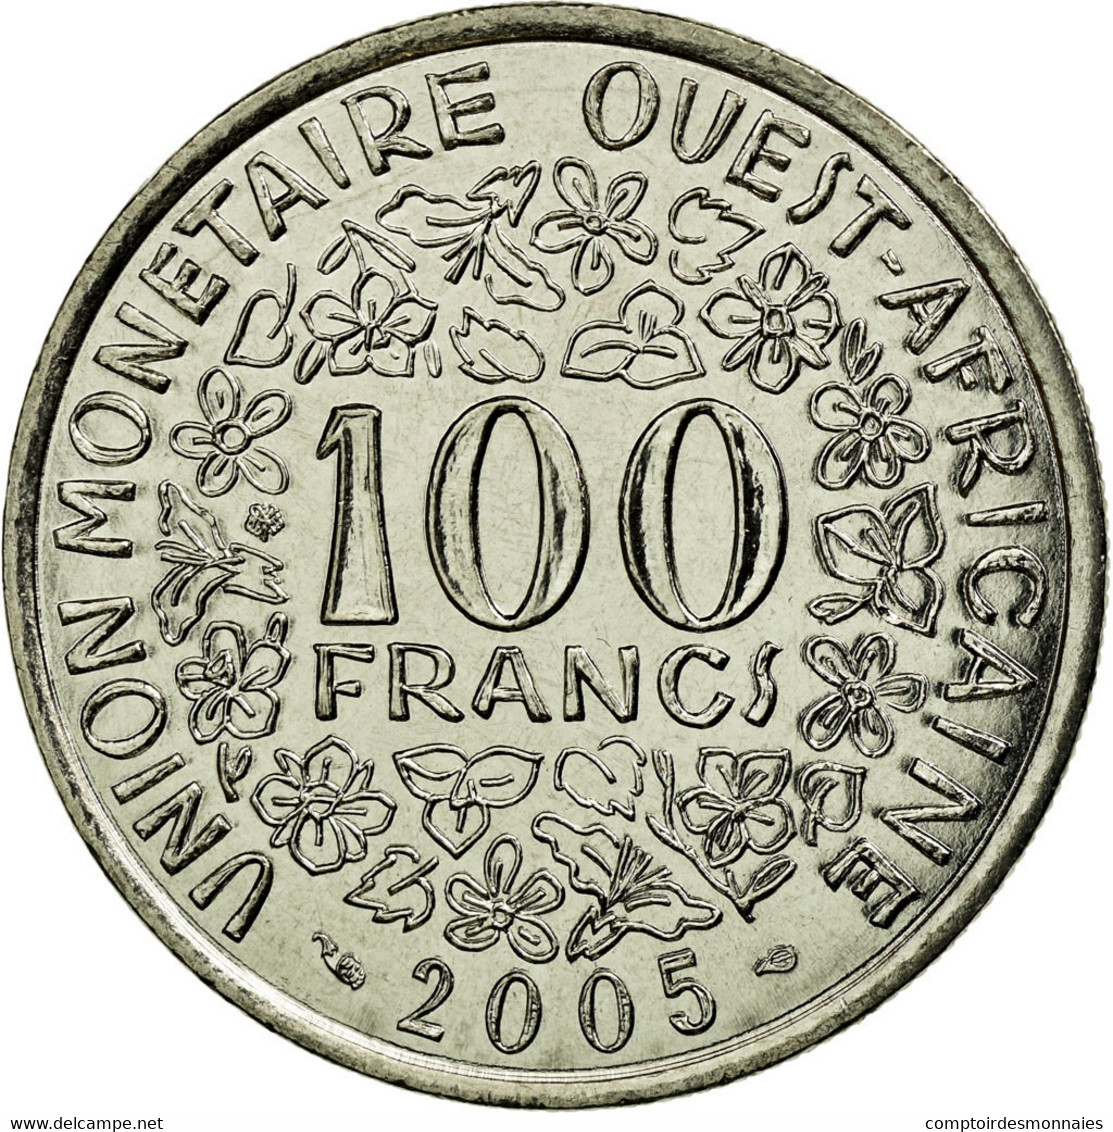 Monnaie, West African States, 100 Francs, 2005, SUP, Nickel, KM:4 - Côte-d'Ivoire